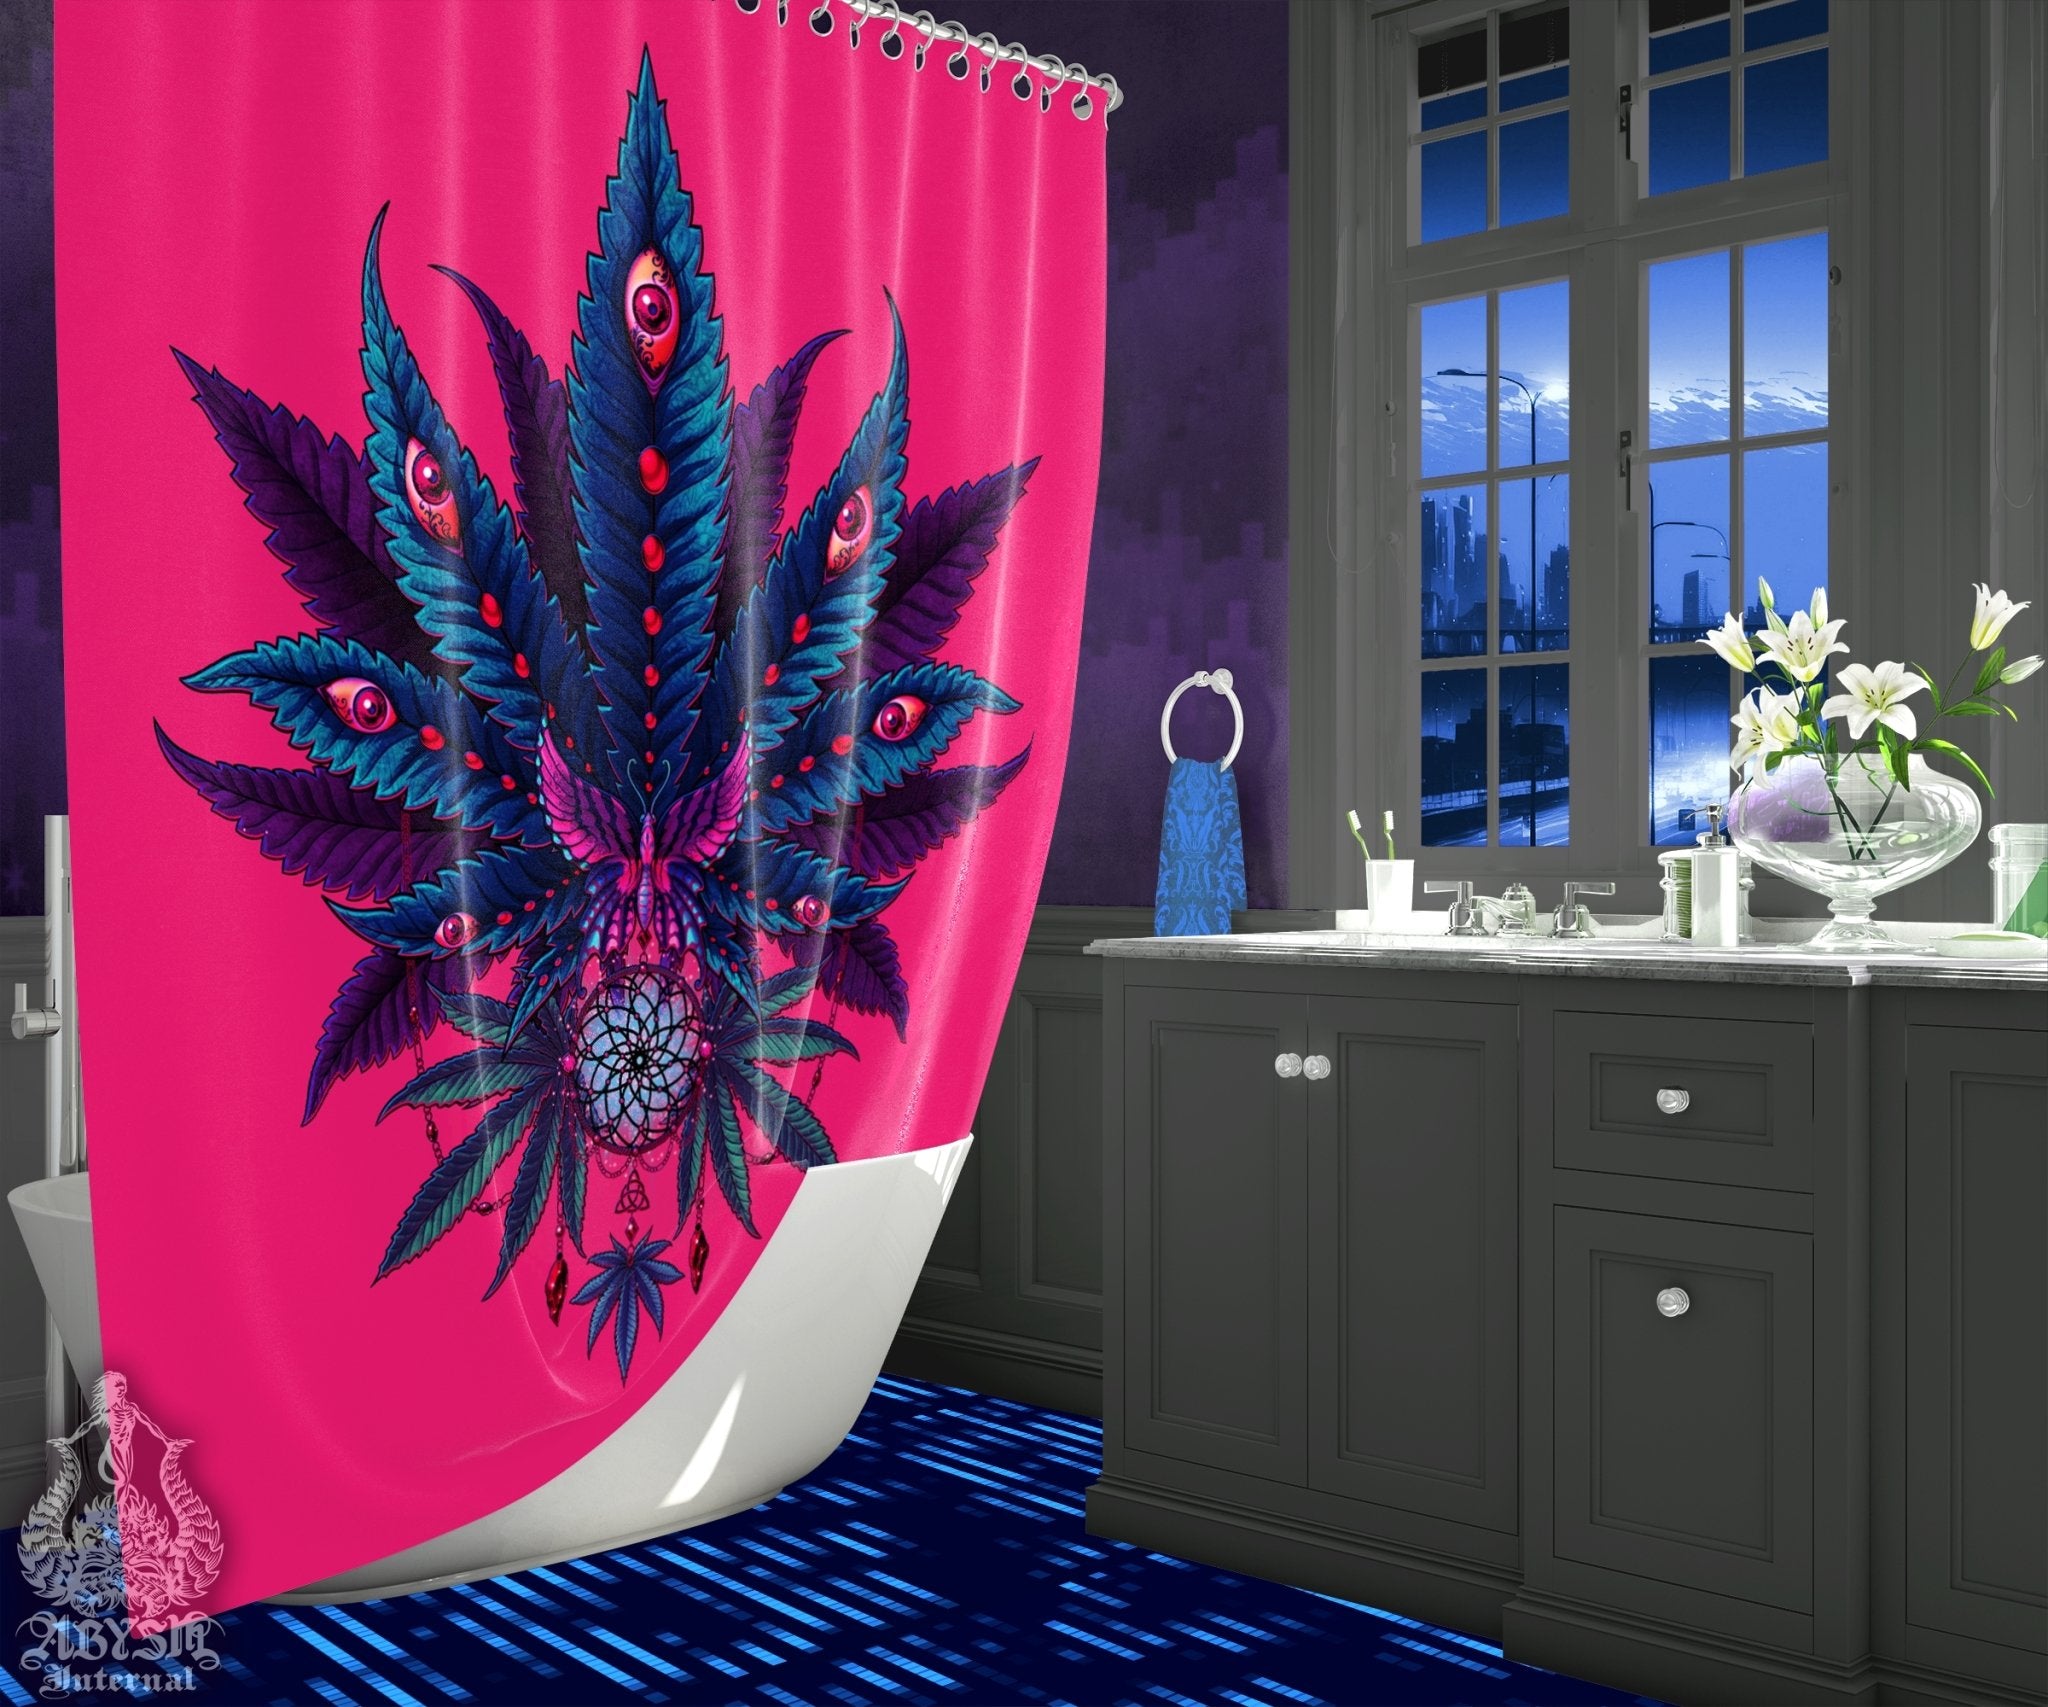 Weed Shower Curtain, Indie Bathroom Decor, Psychedelic Cannabis, 80s Retrowave, Hippie 420 Home Art - Marijuana Neon I - Abysm Internal